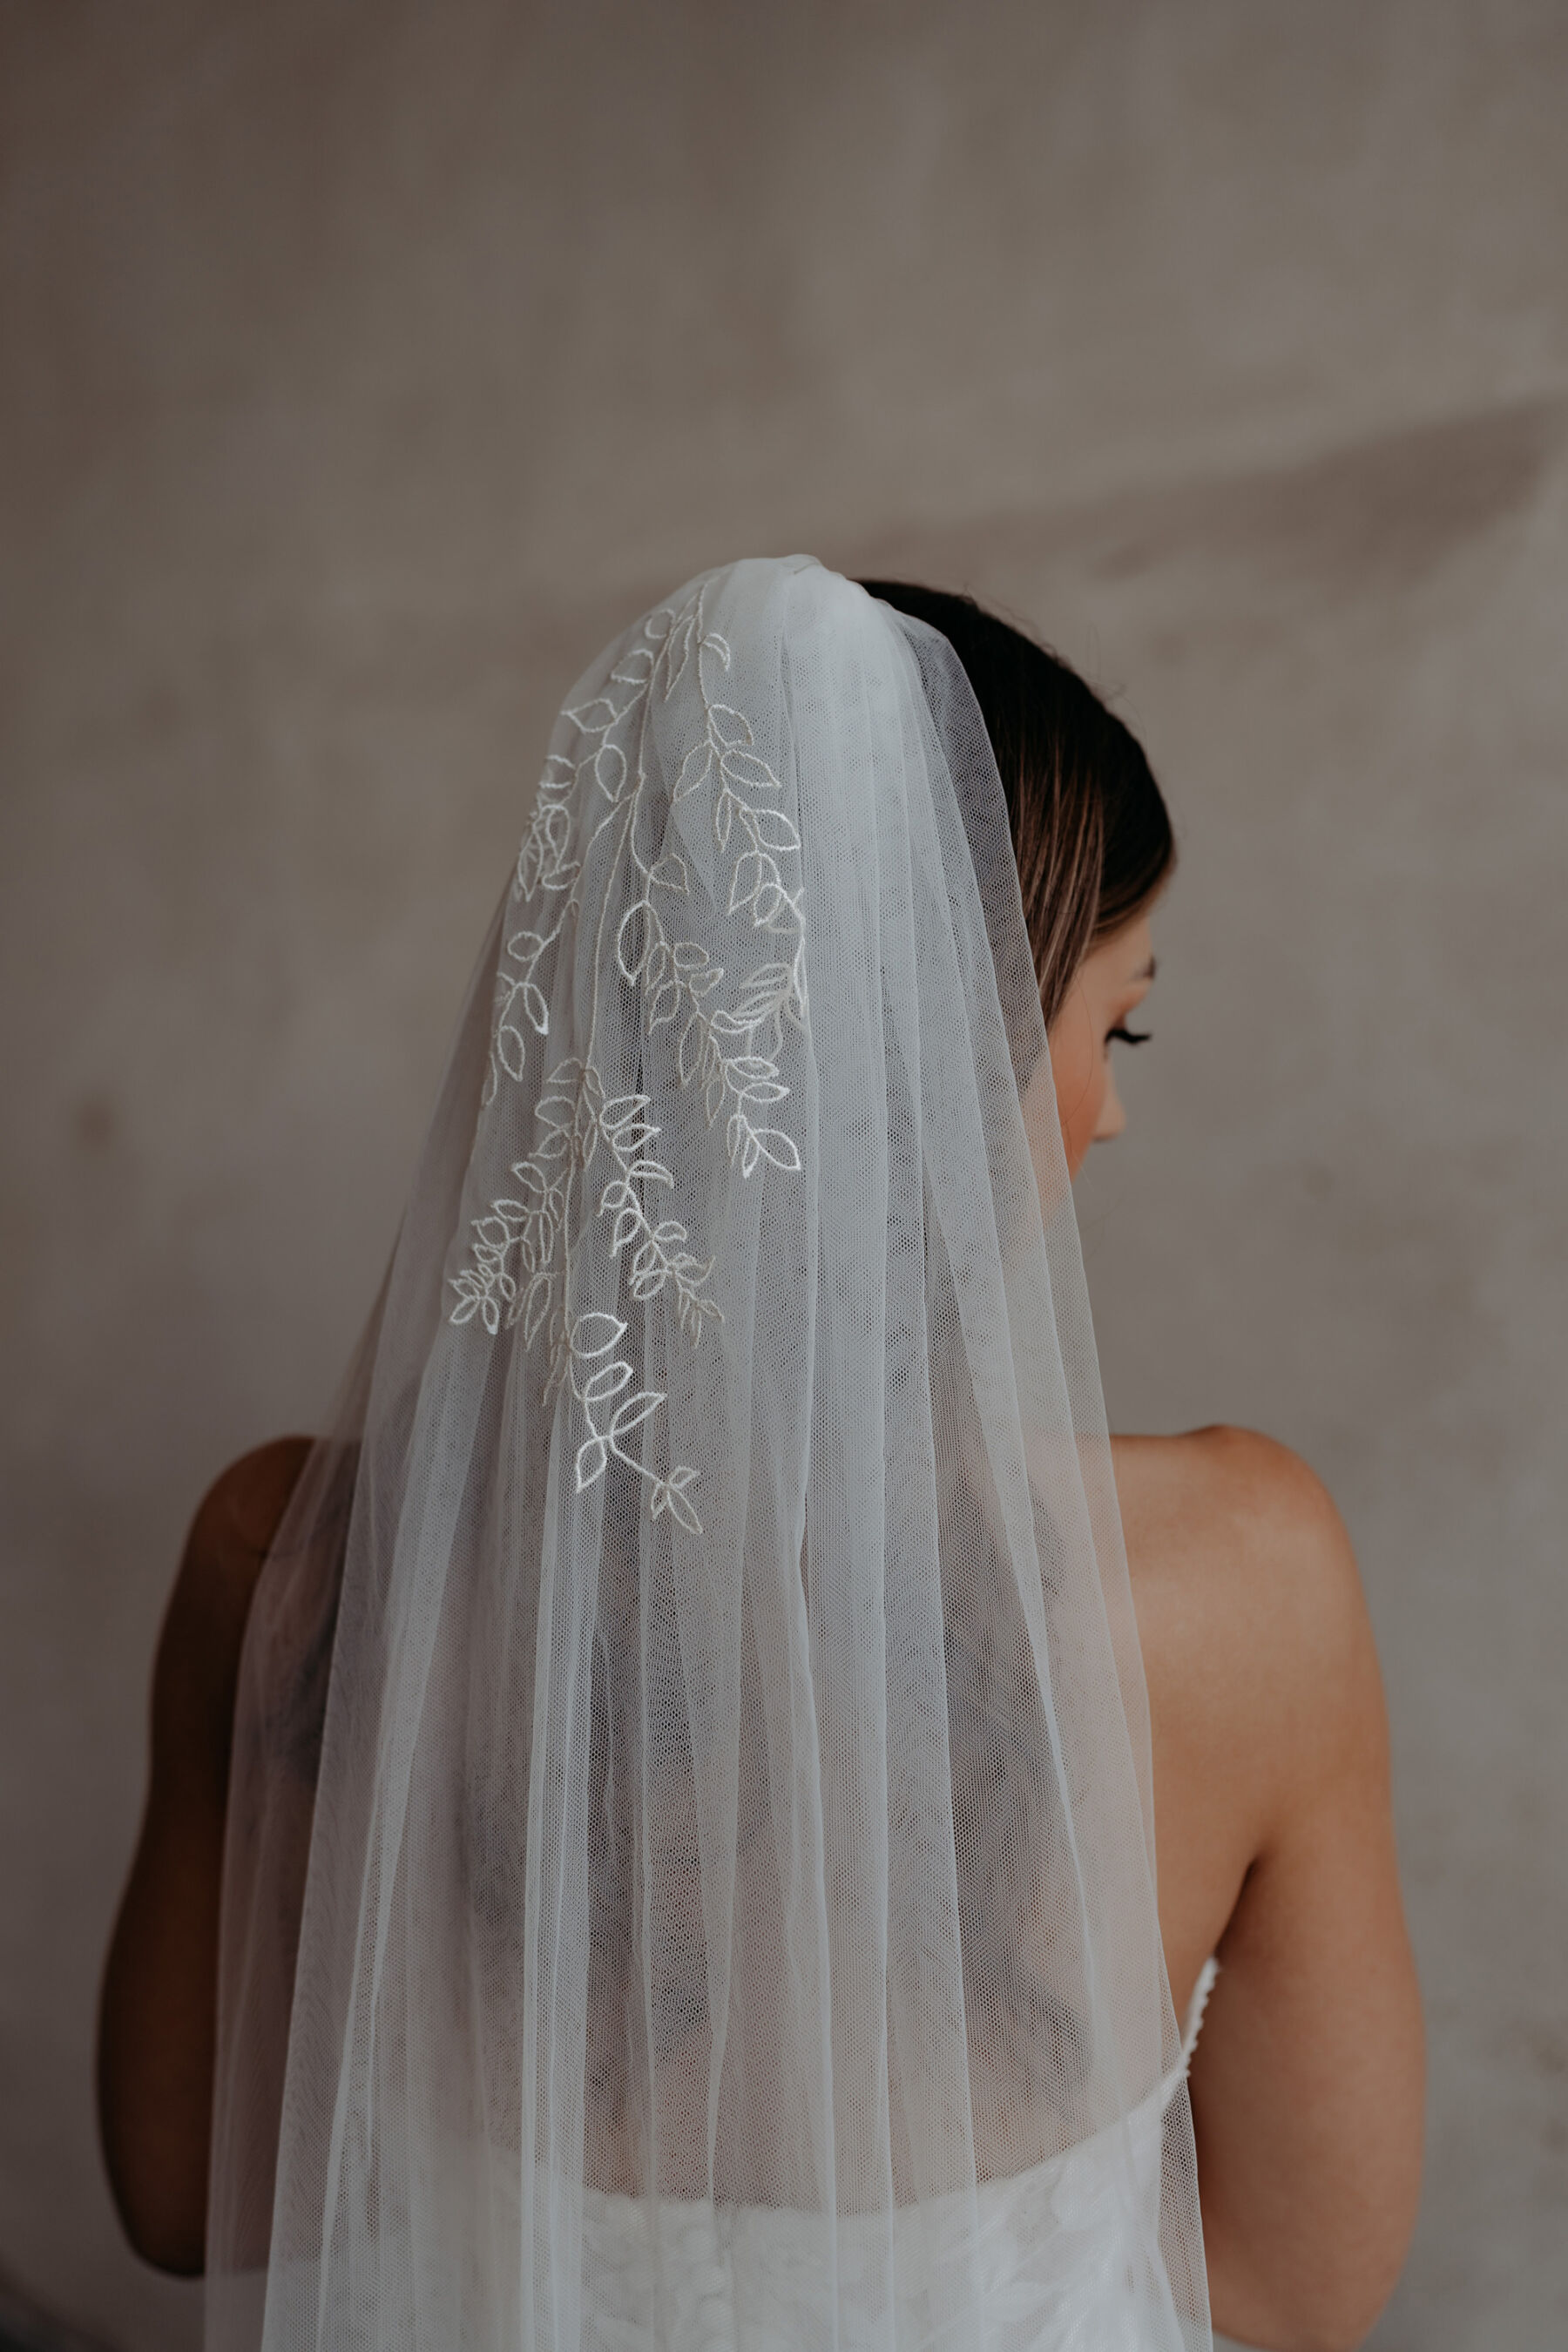 Embroidered wedding veil by Rebecca Anne Designs